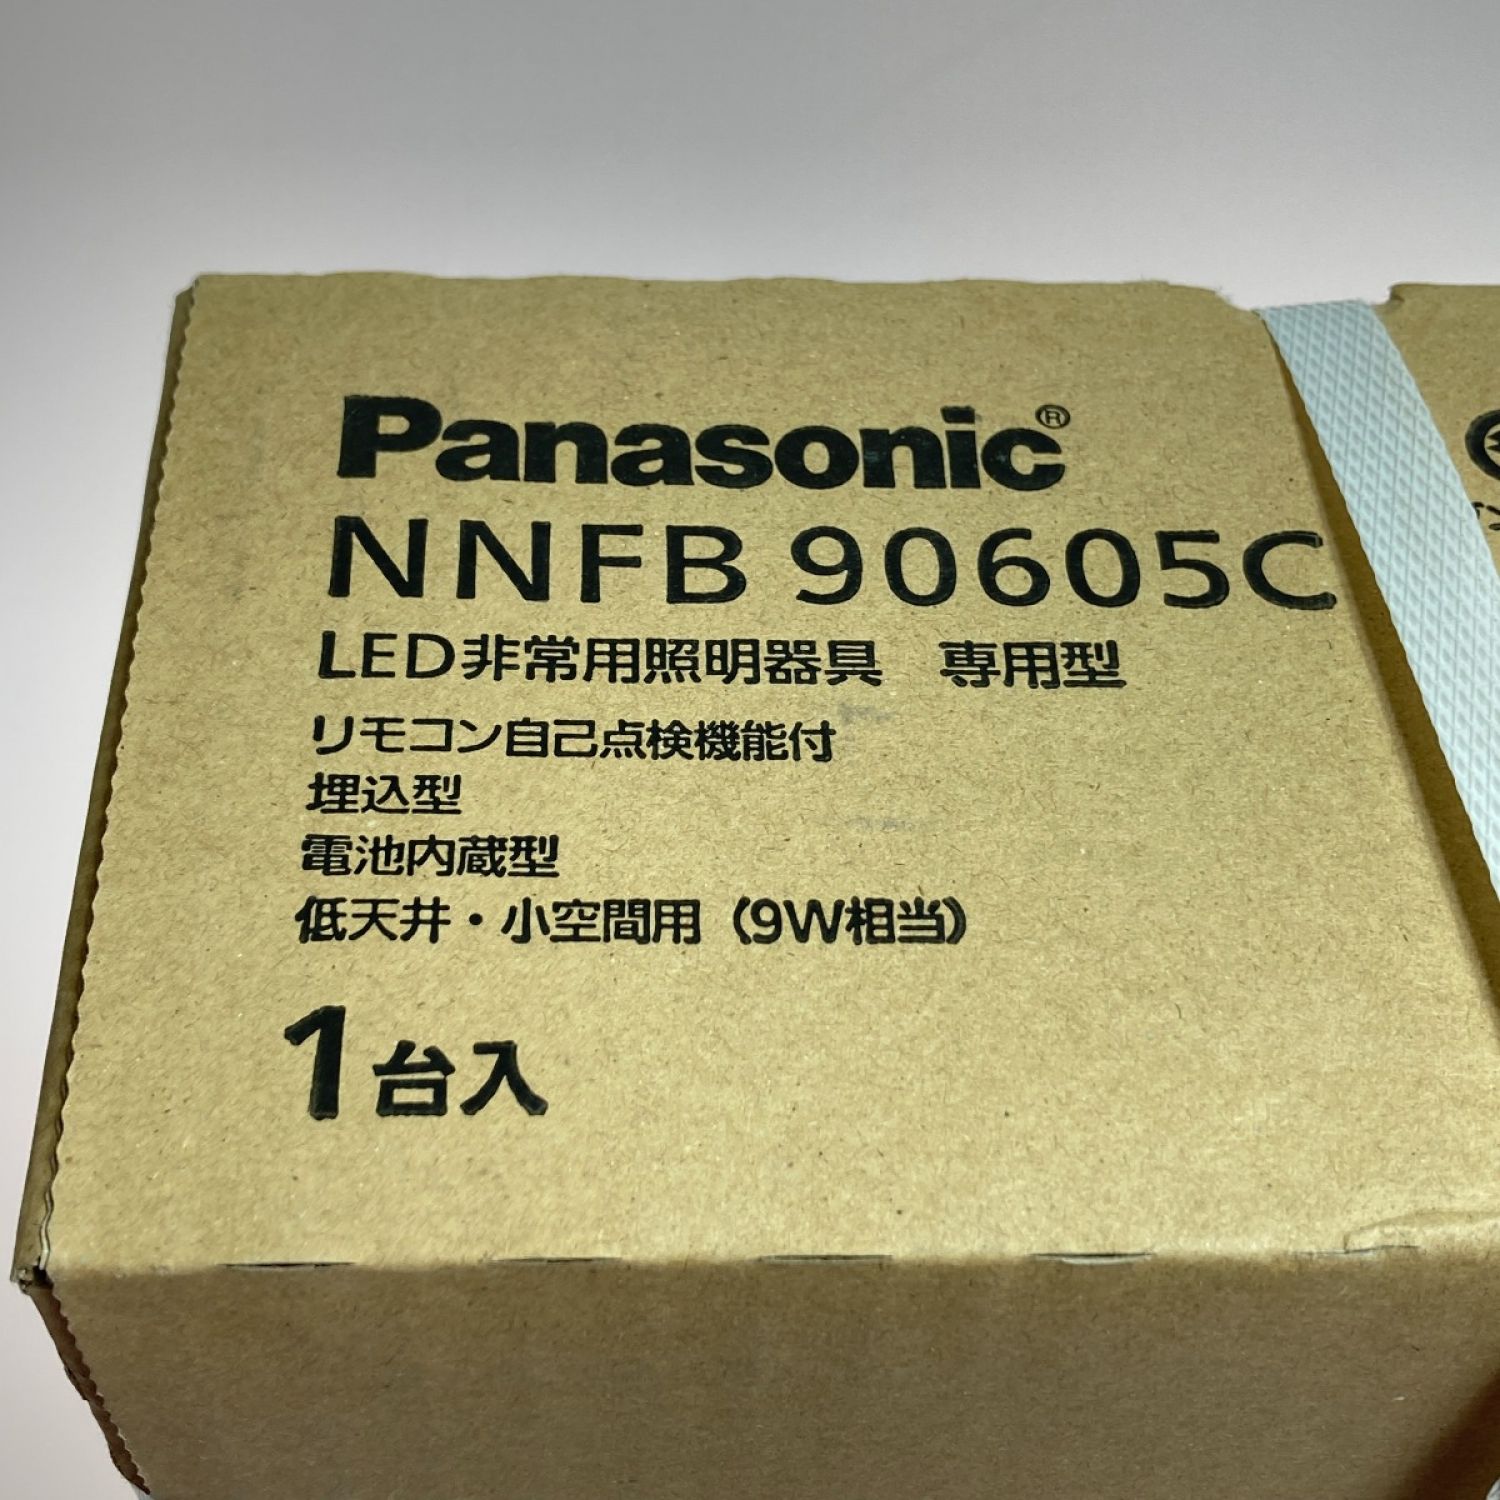 Panasonic 非常用照明器具 NNFB90605C 3台セット-